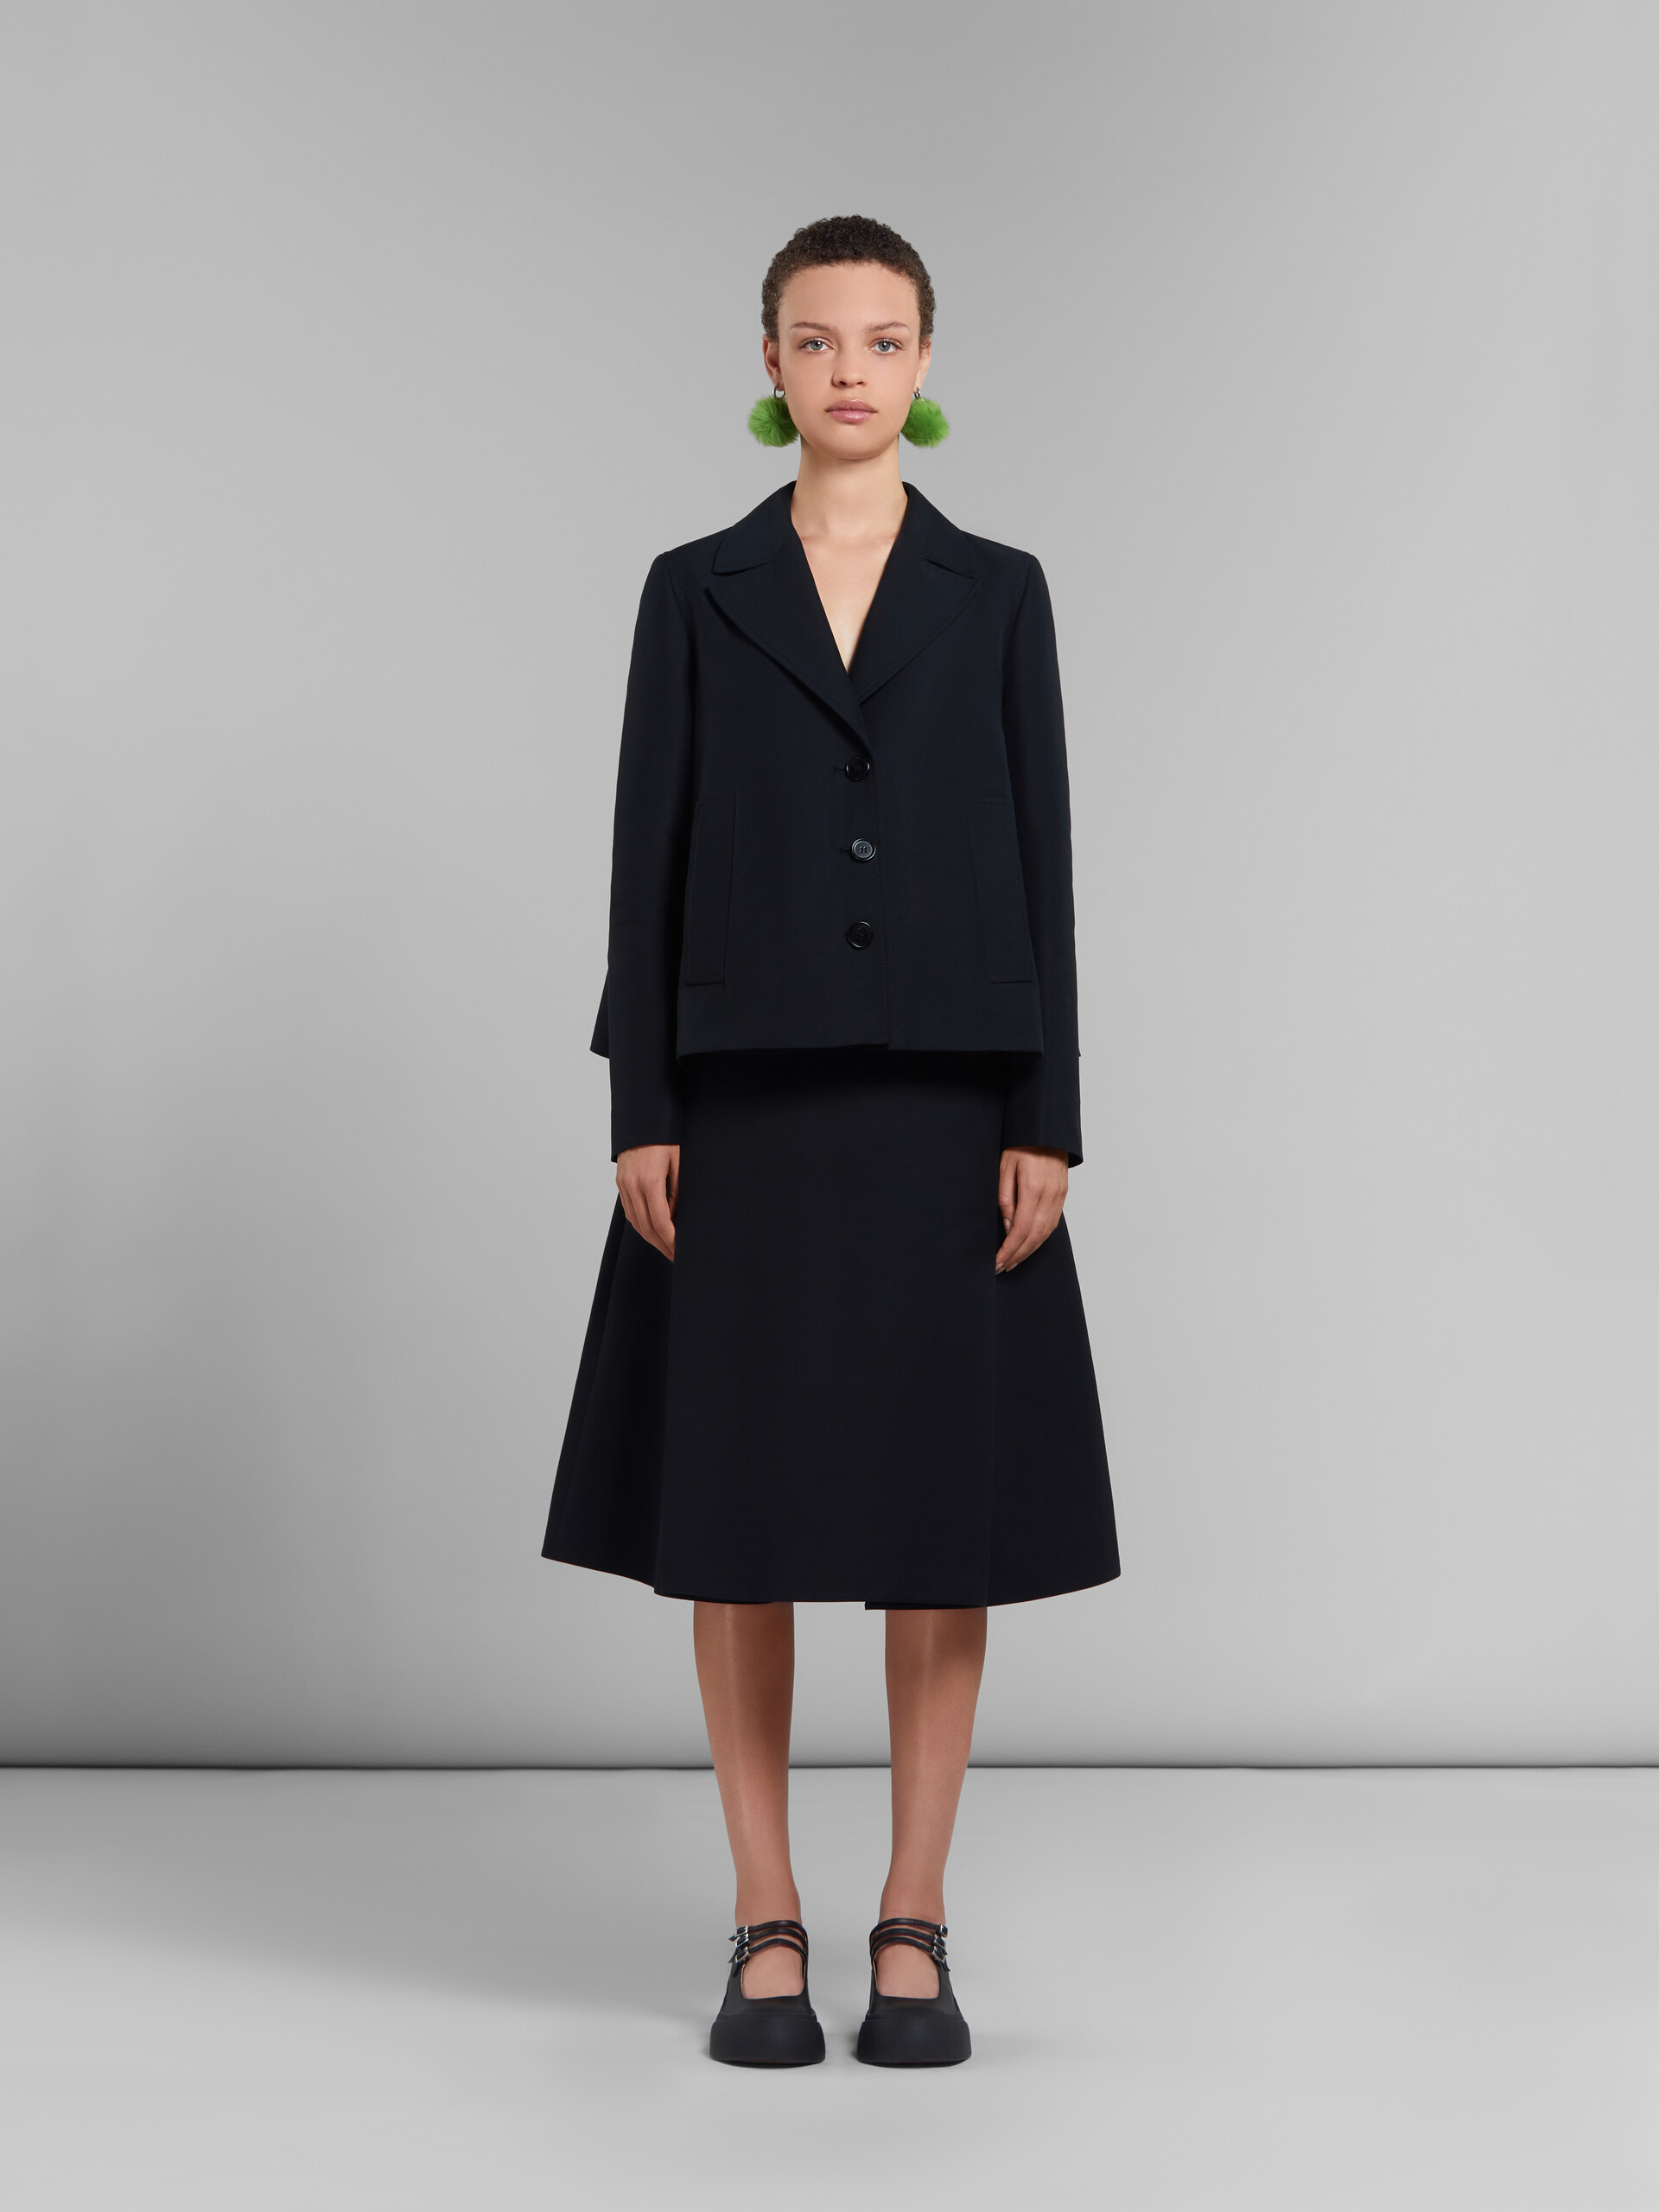 Black cady midi skirt with maxi pleats - Skirts - Image 2